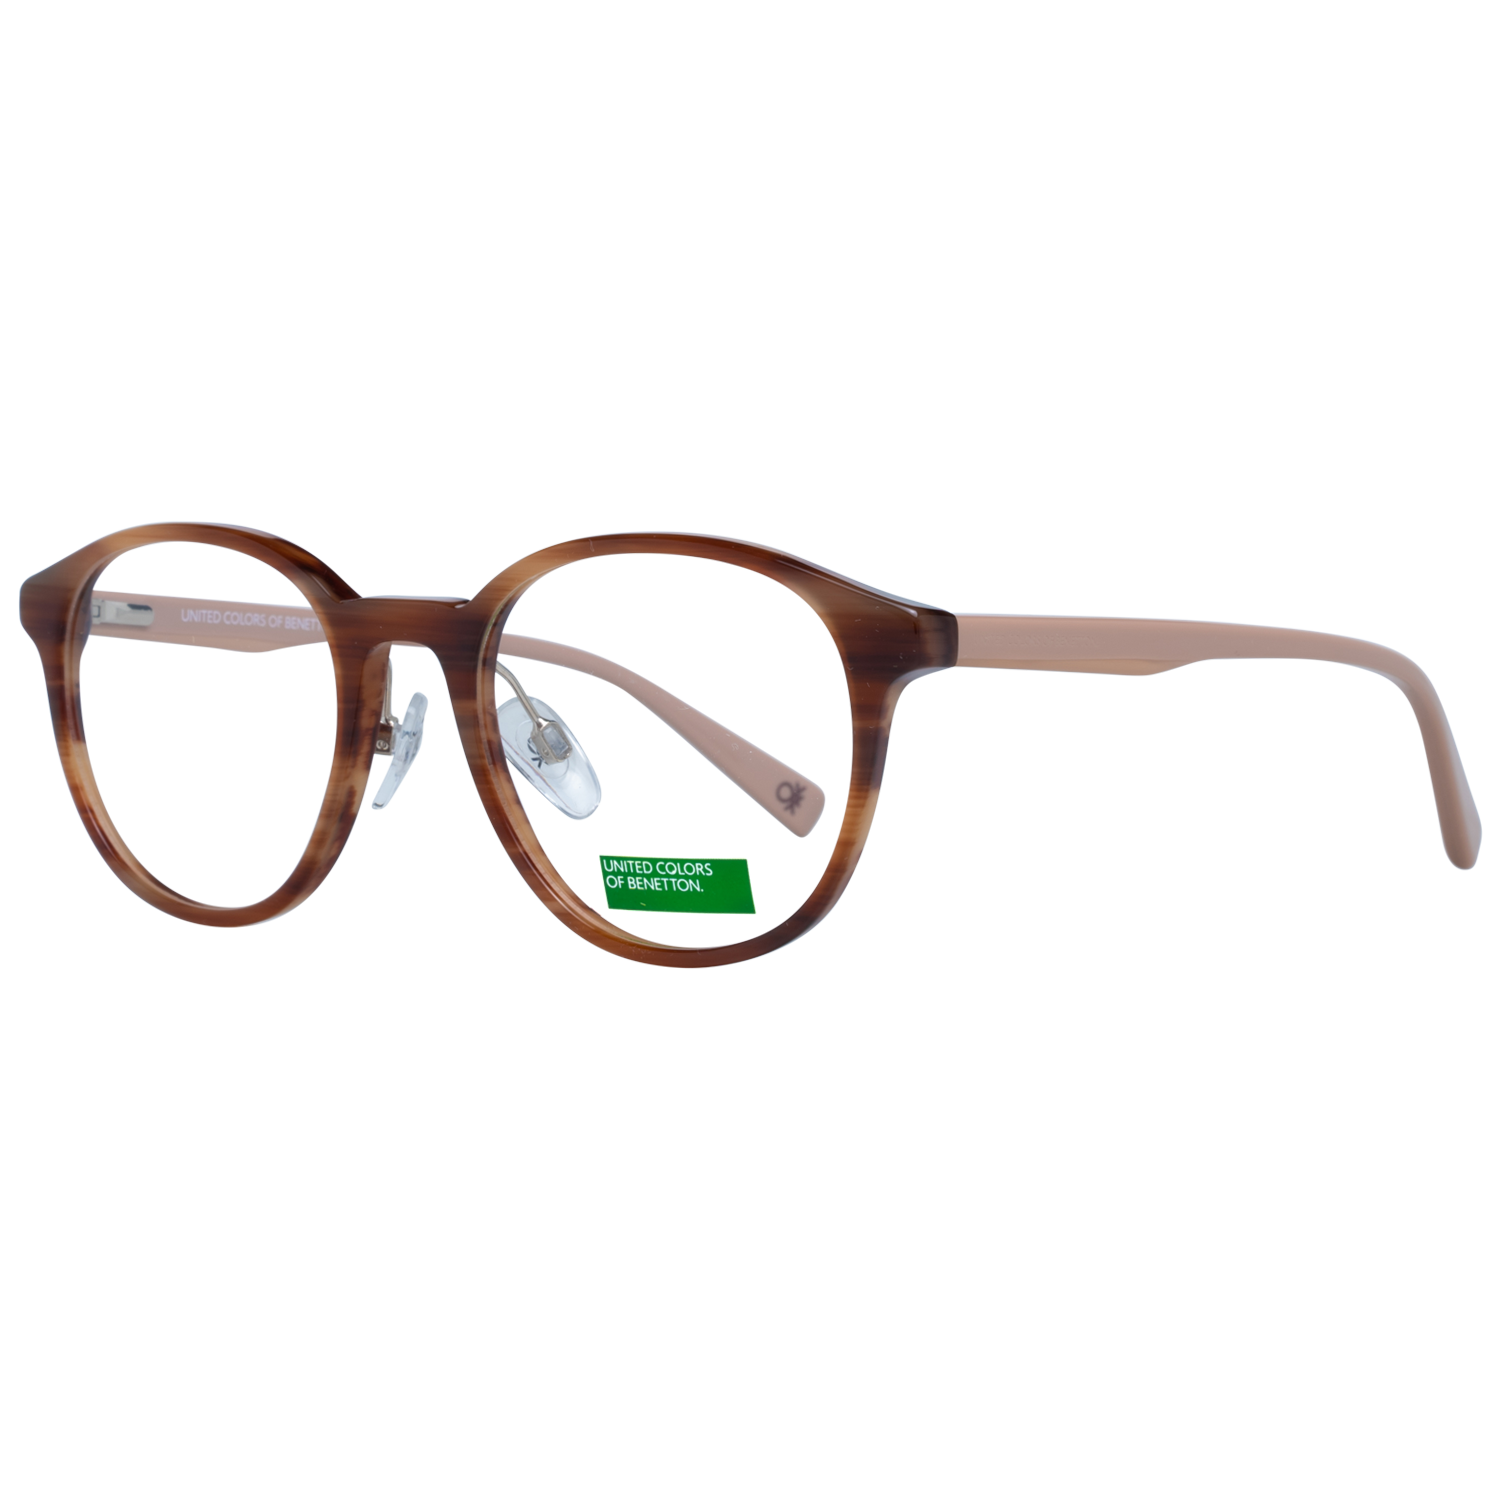 Benetton Frames Benetton Optical Frame BEO1007 151 48 Eyeglasses Eyewear UK USA Australia 